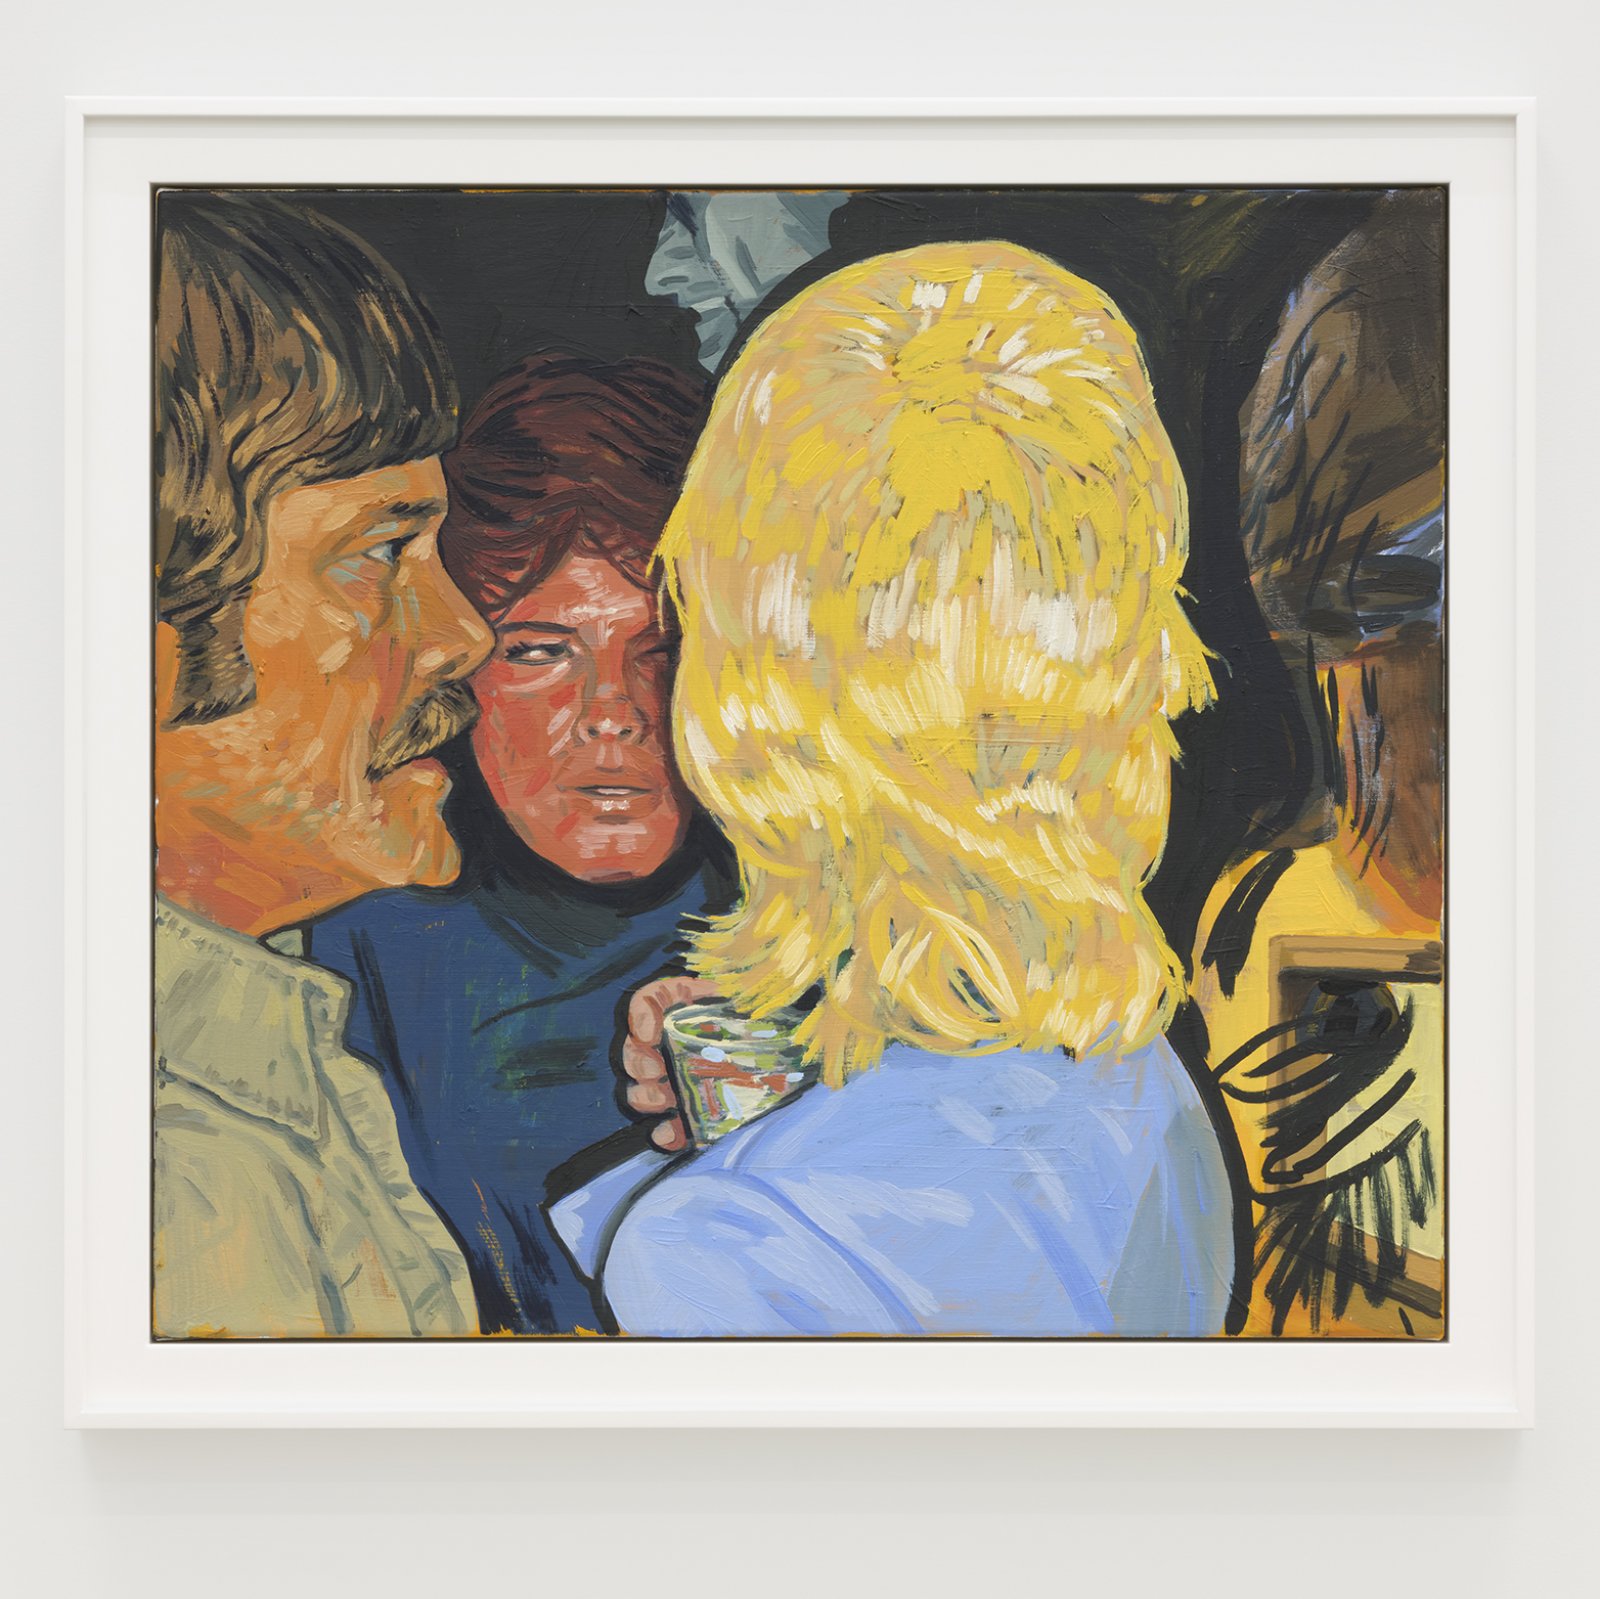 ​Damian Moppett, Small Party, 2020, oil on canvas, 30 x 33 in. (76 x 84 cm) by Damian Moppett